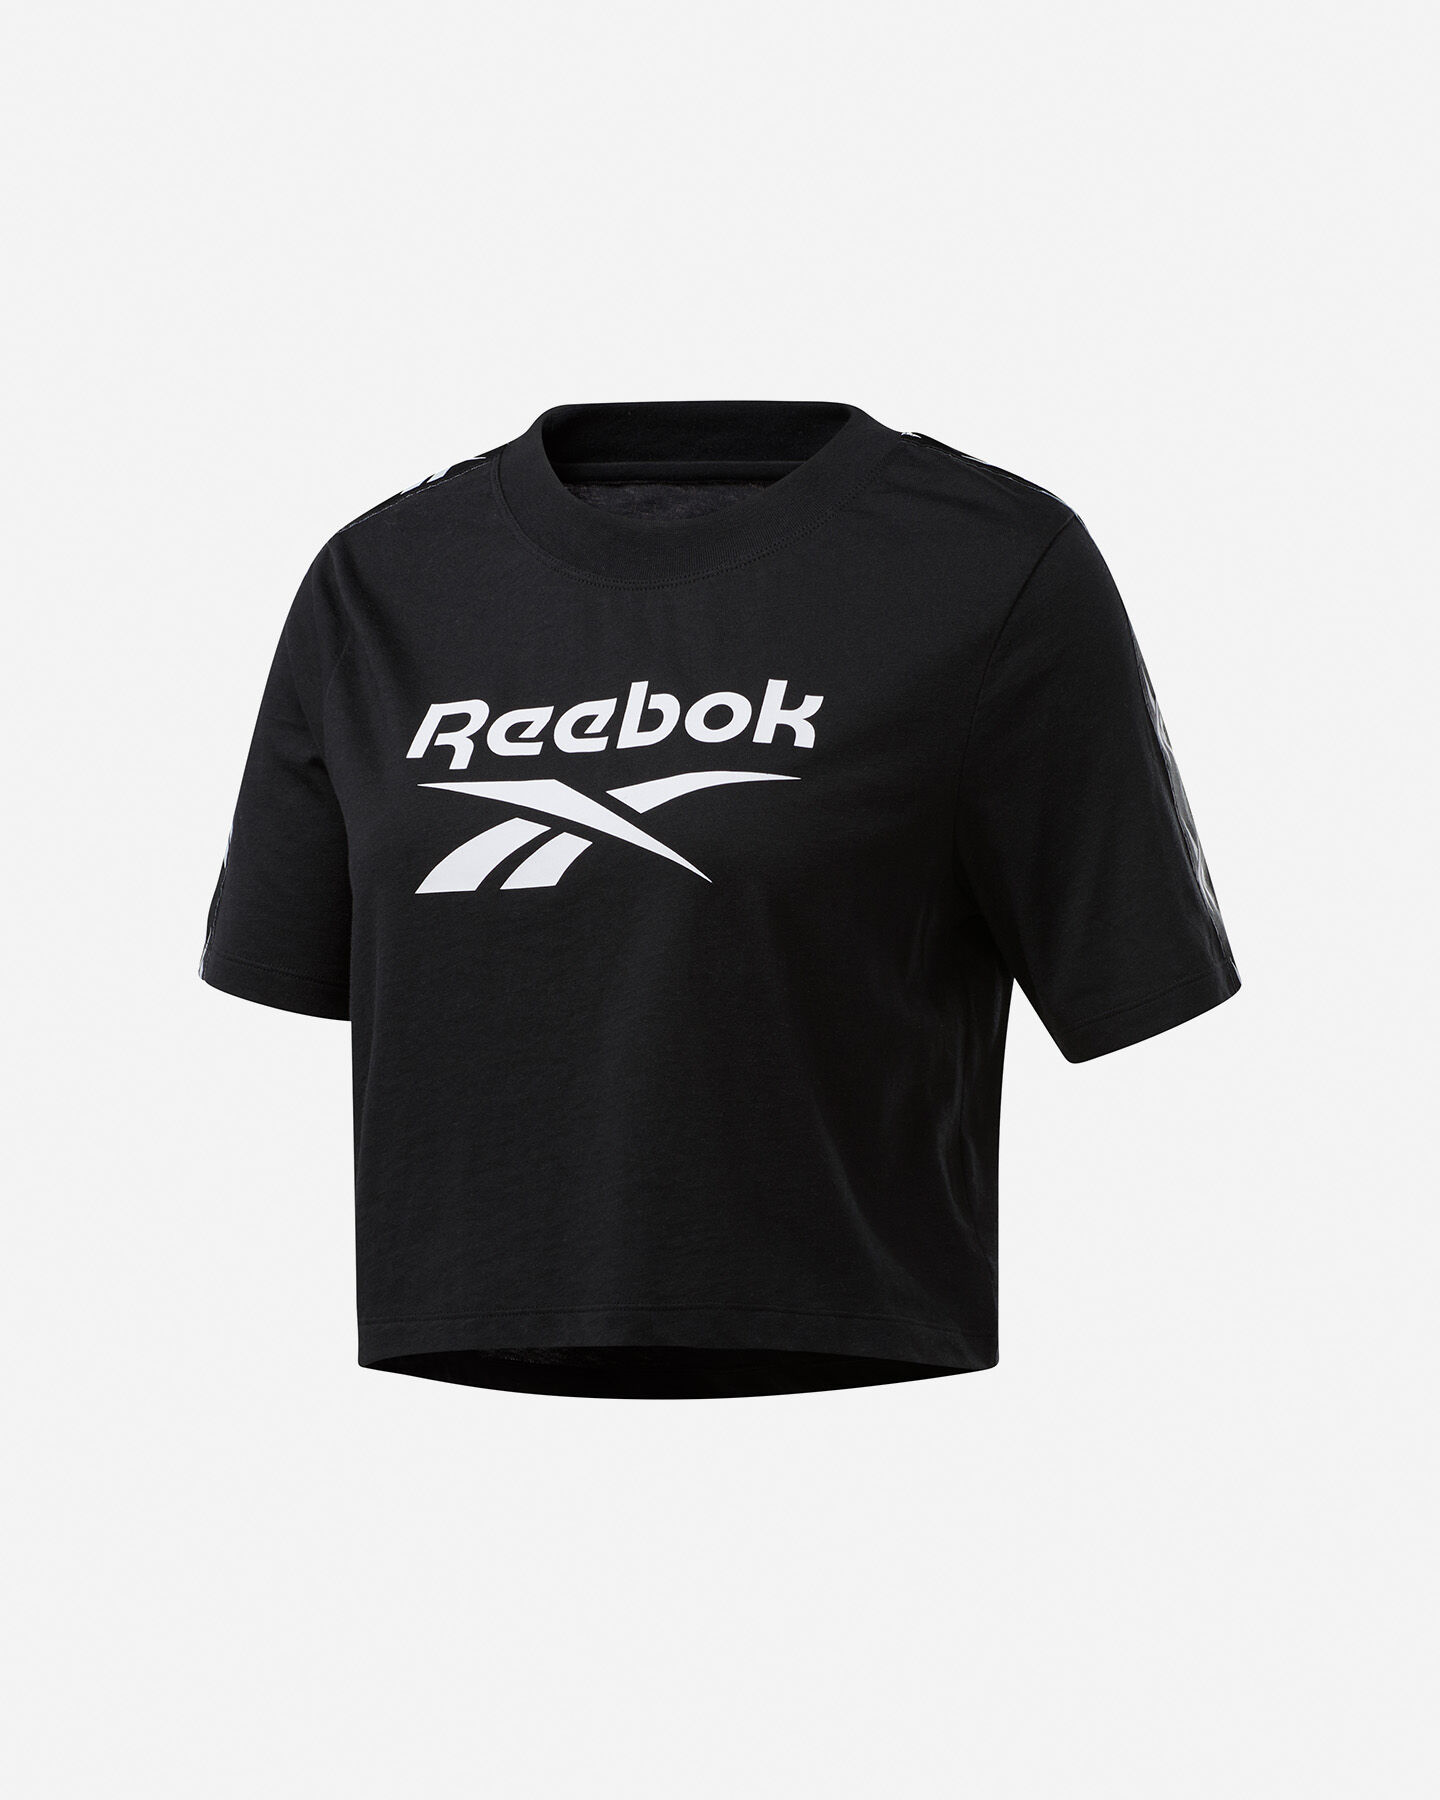  T-Shirt REEBOK TAPE LOGO W S5258650|UNI|L scatto 0